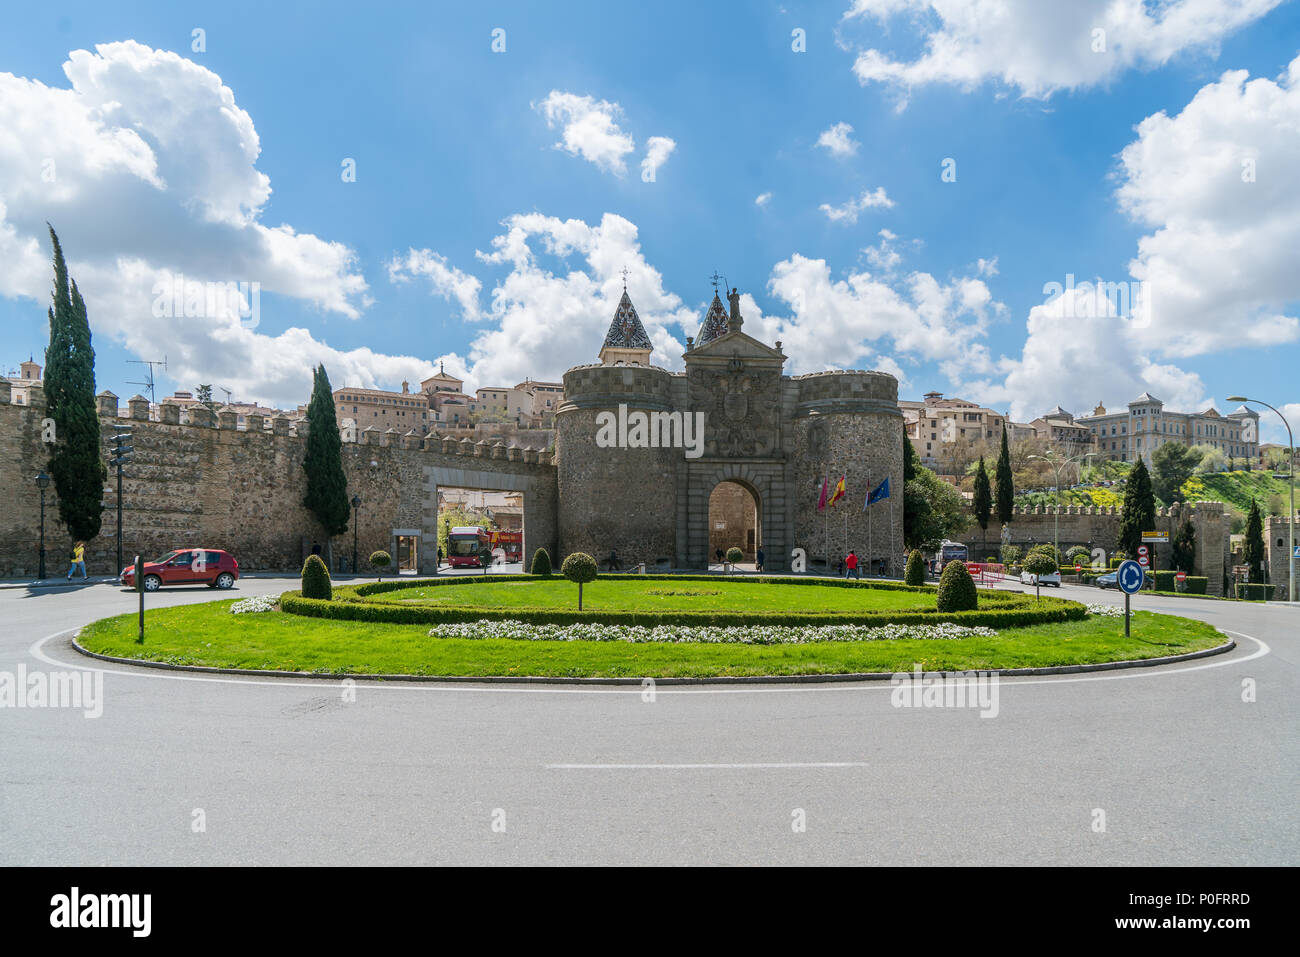 Puerta de Bisagra o Alfonso vi porta in città di Toledo, Spagna. Foto Stock